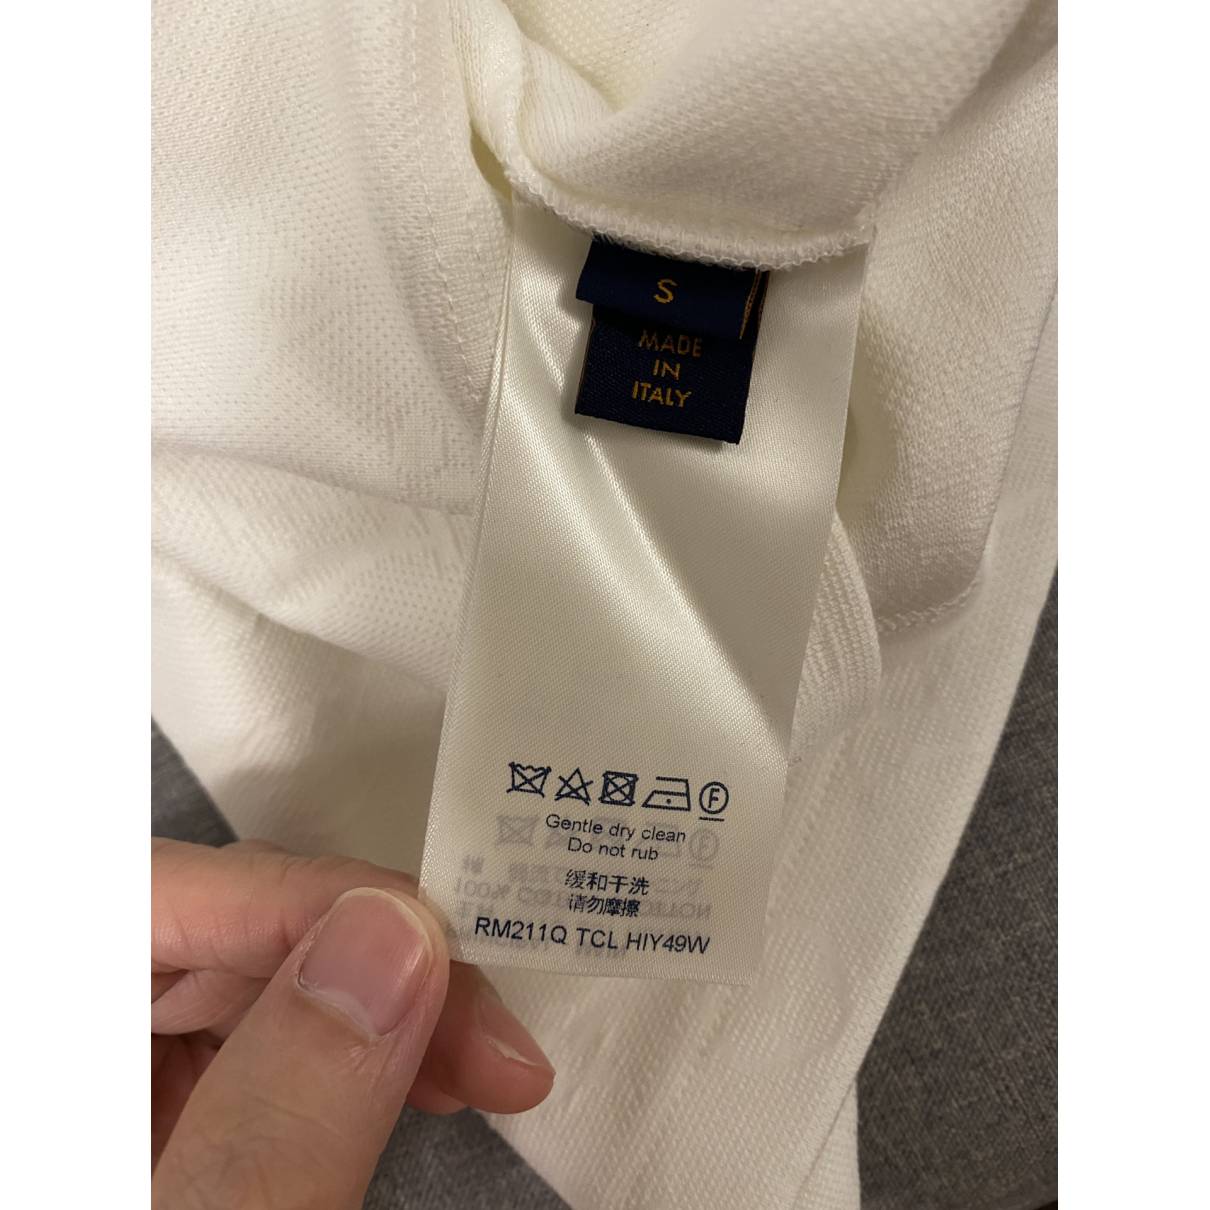 T-shirt Louis Vuitton White size M International in Cotton - 28850590